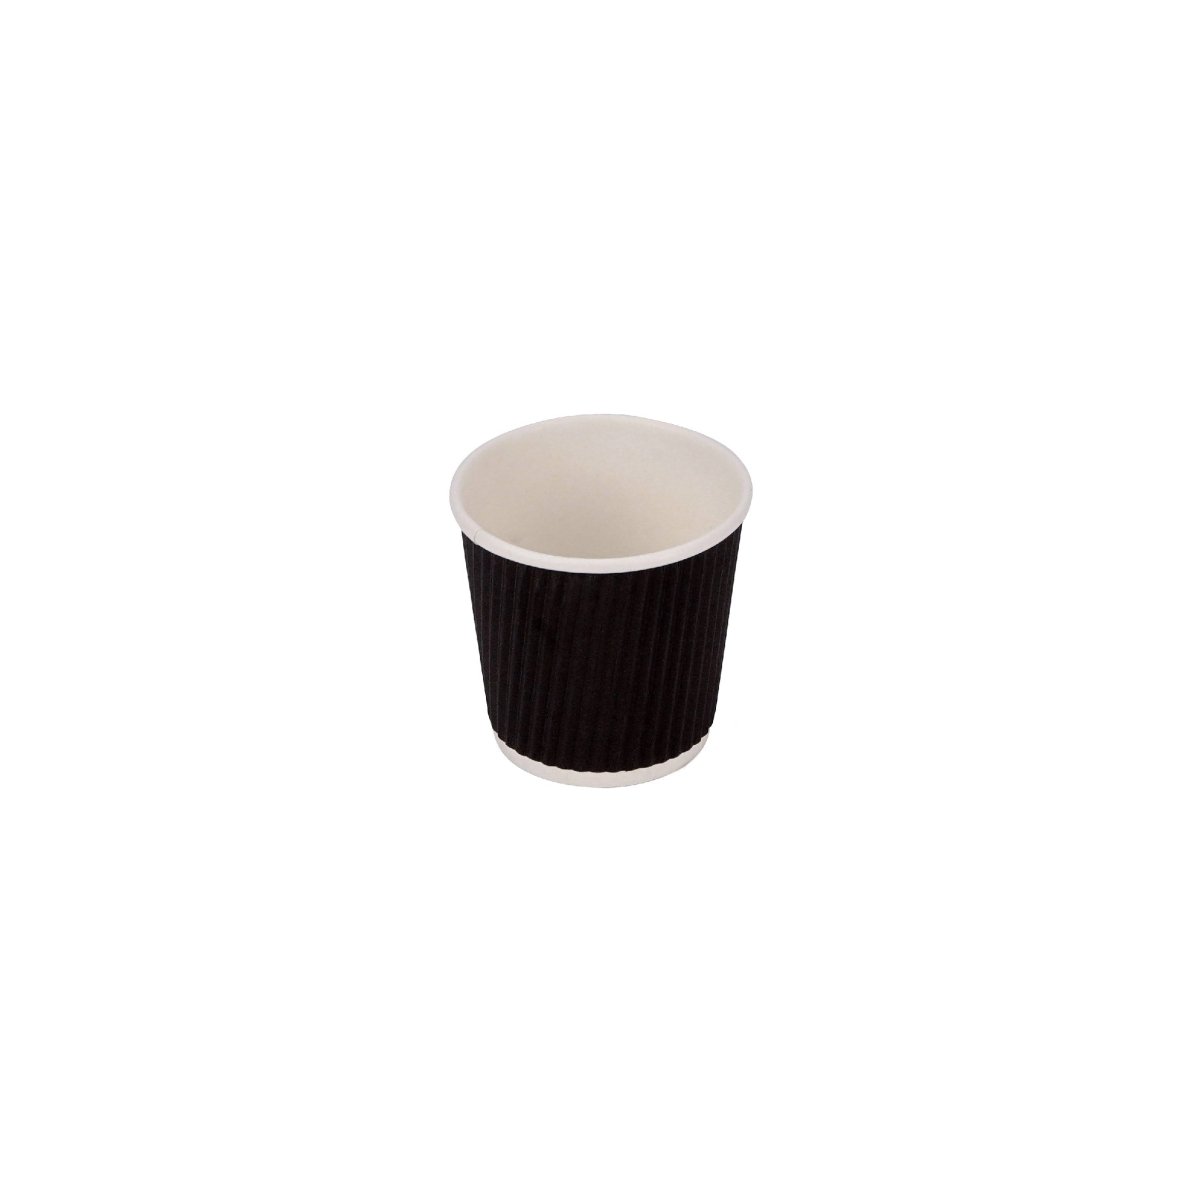 Black Ripple Paper Cups - hotpackwebstore.com - Ripple Paper Cups